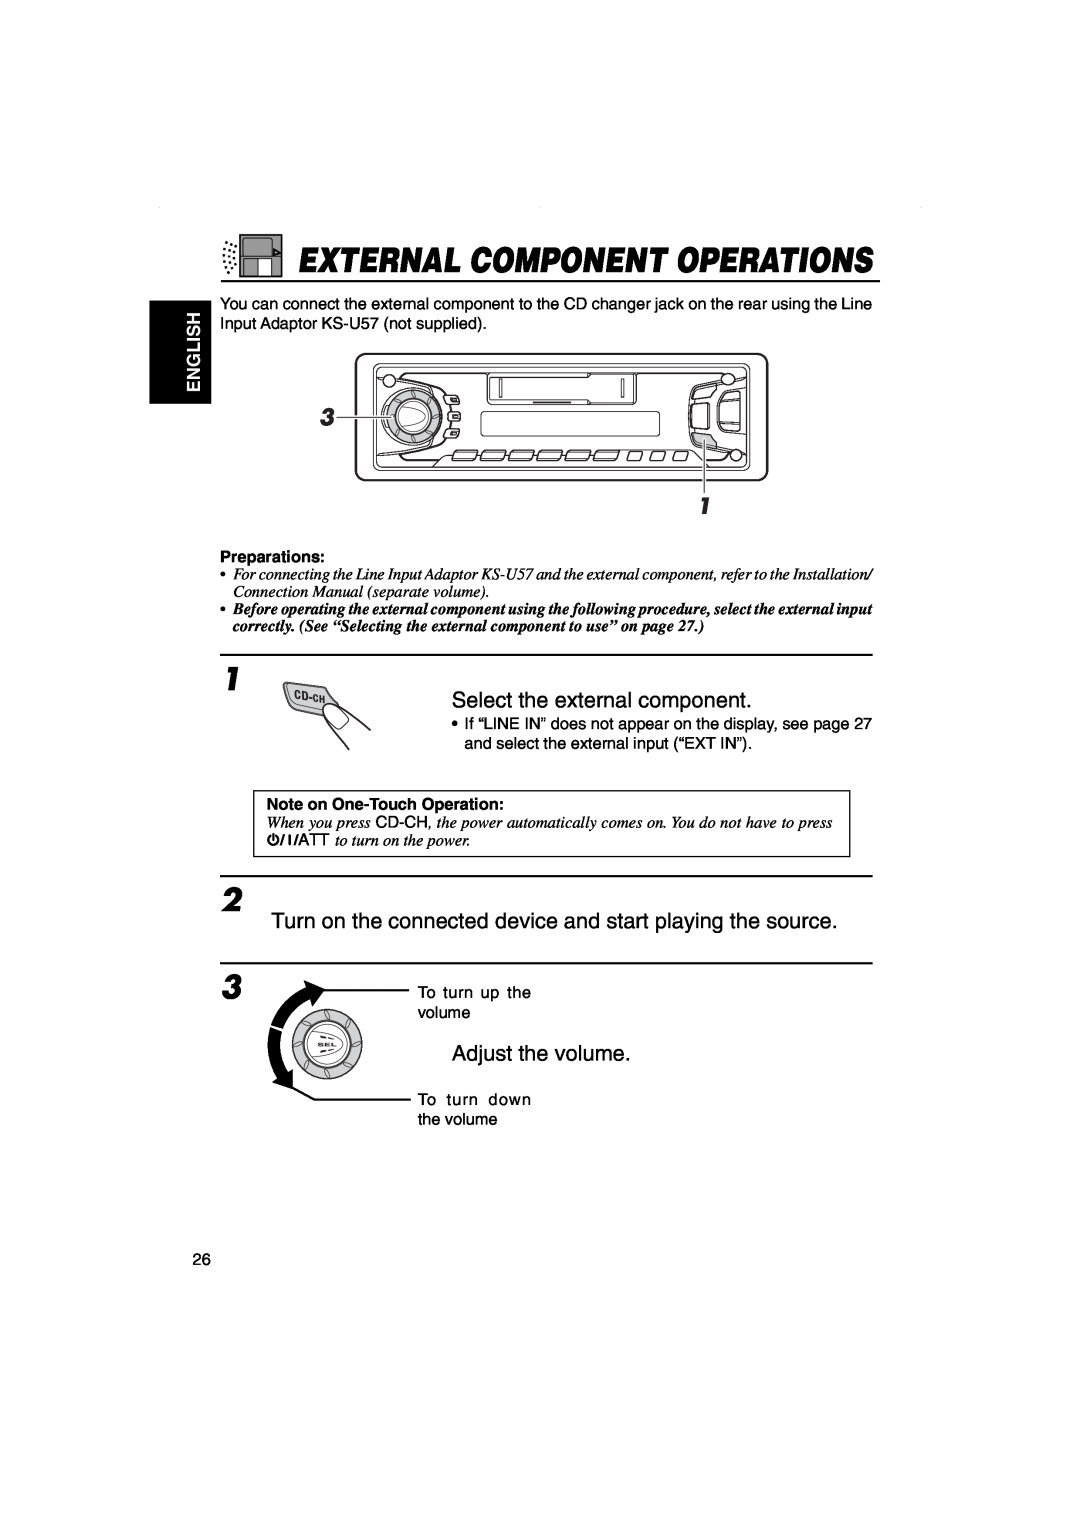 JVC KS-FX270 manual Select the external component, External Component Operations, Adjust the volume, English, Preparations 